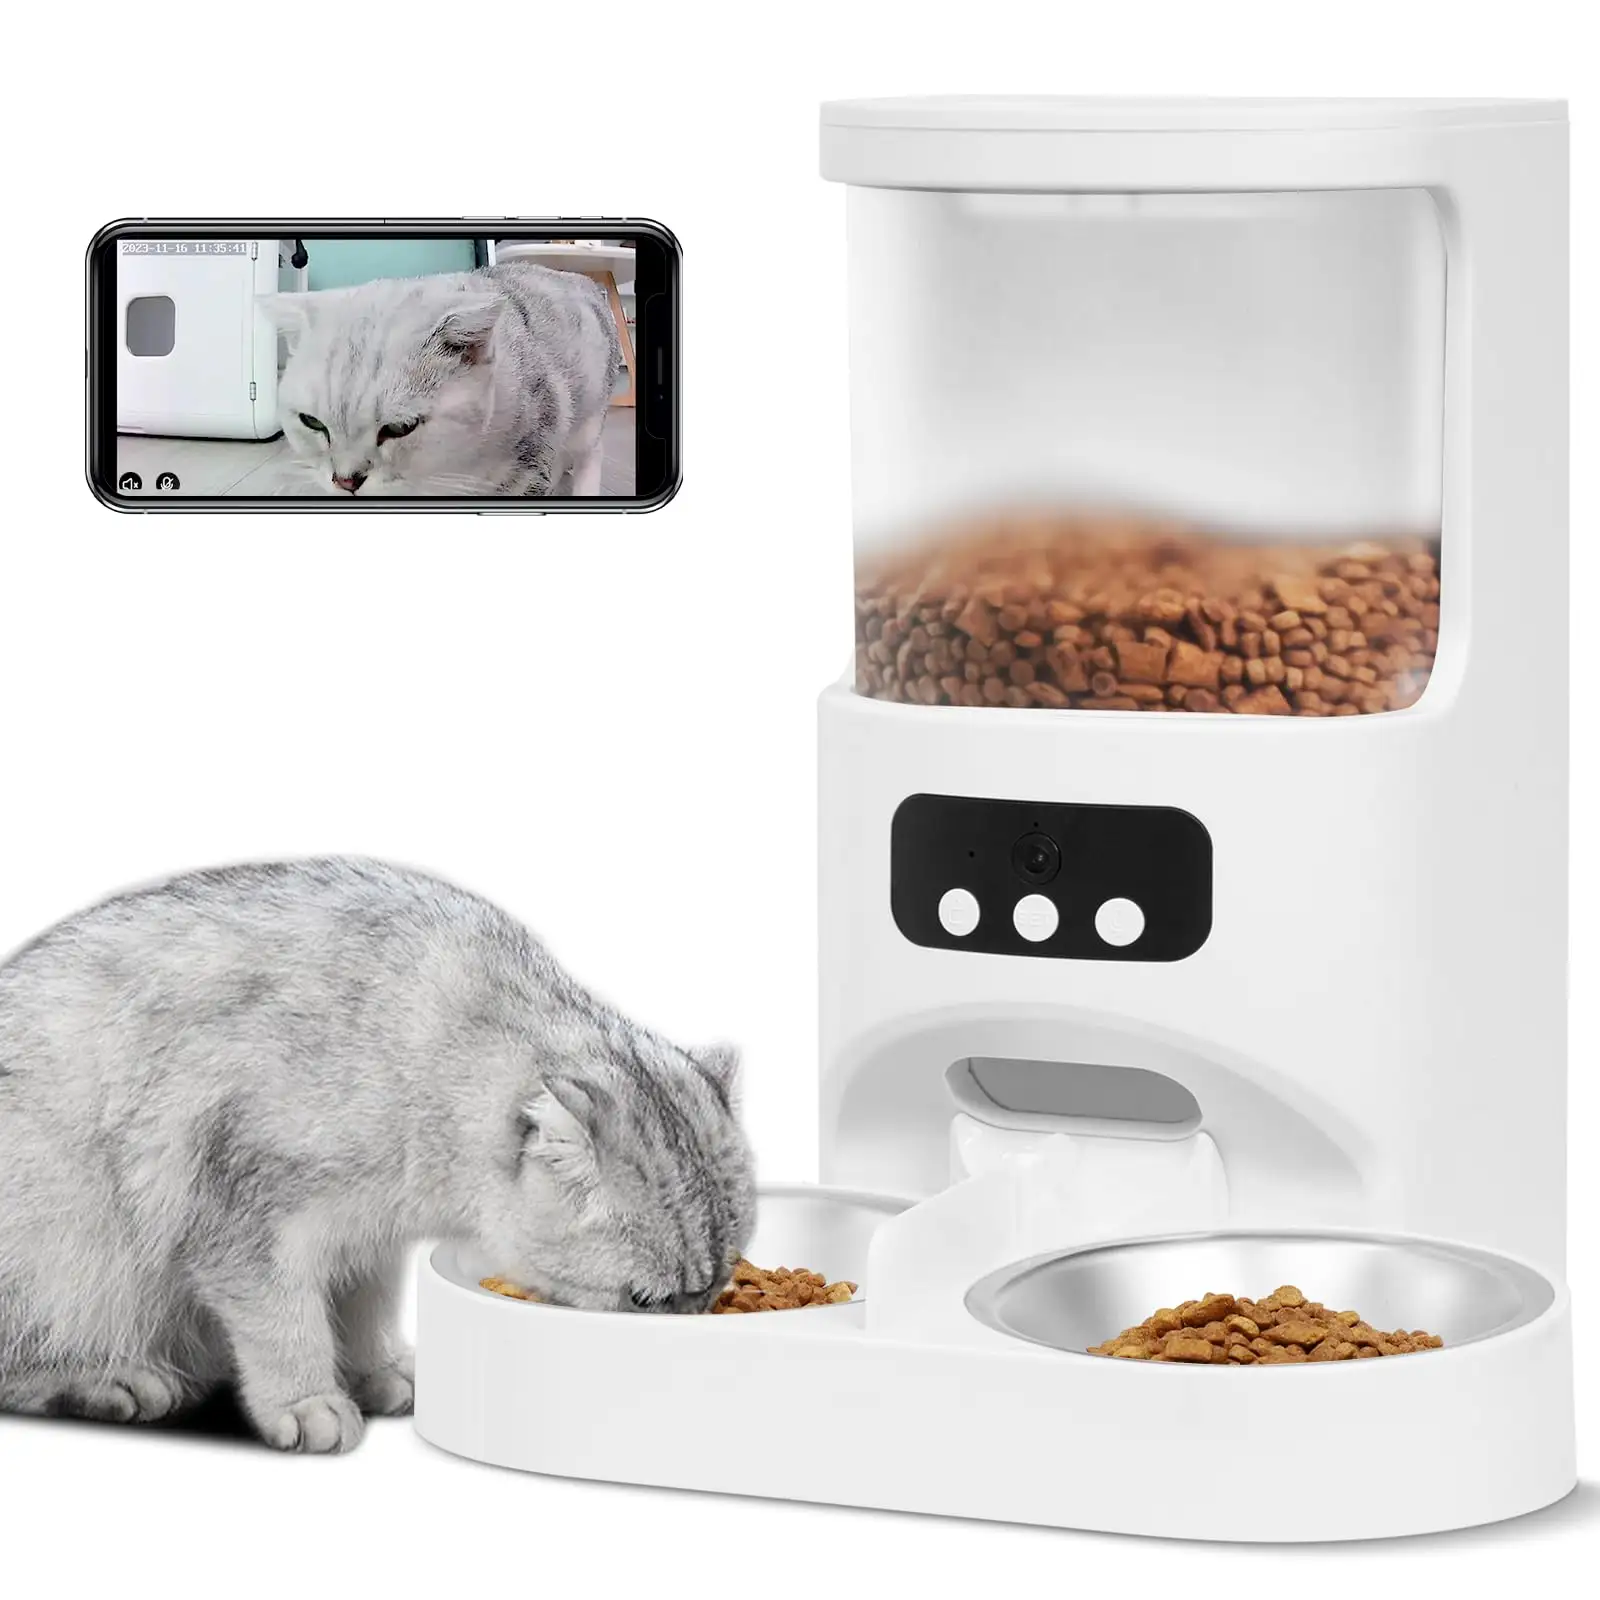 Mangkuk pemberi makan hewan peliharaan otomatis, Tempat makan anjing peliharaan dengan kamera wifi otomatis pintar hewan peliharaan dengan pengaturan waktu